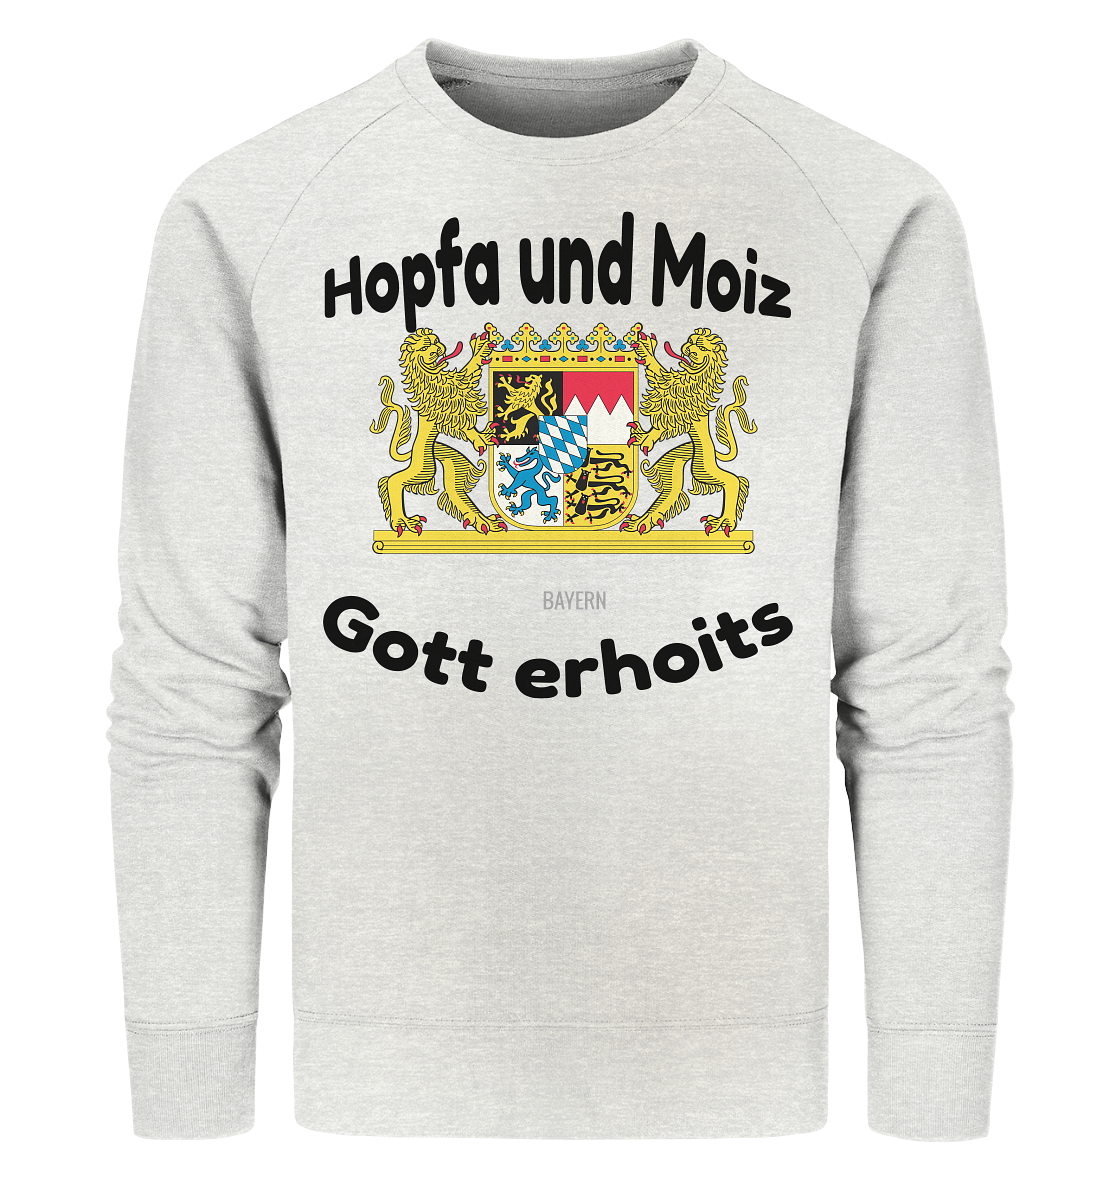 Hopfa and Moiz God erhoits - Organic Sweatshirt